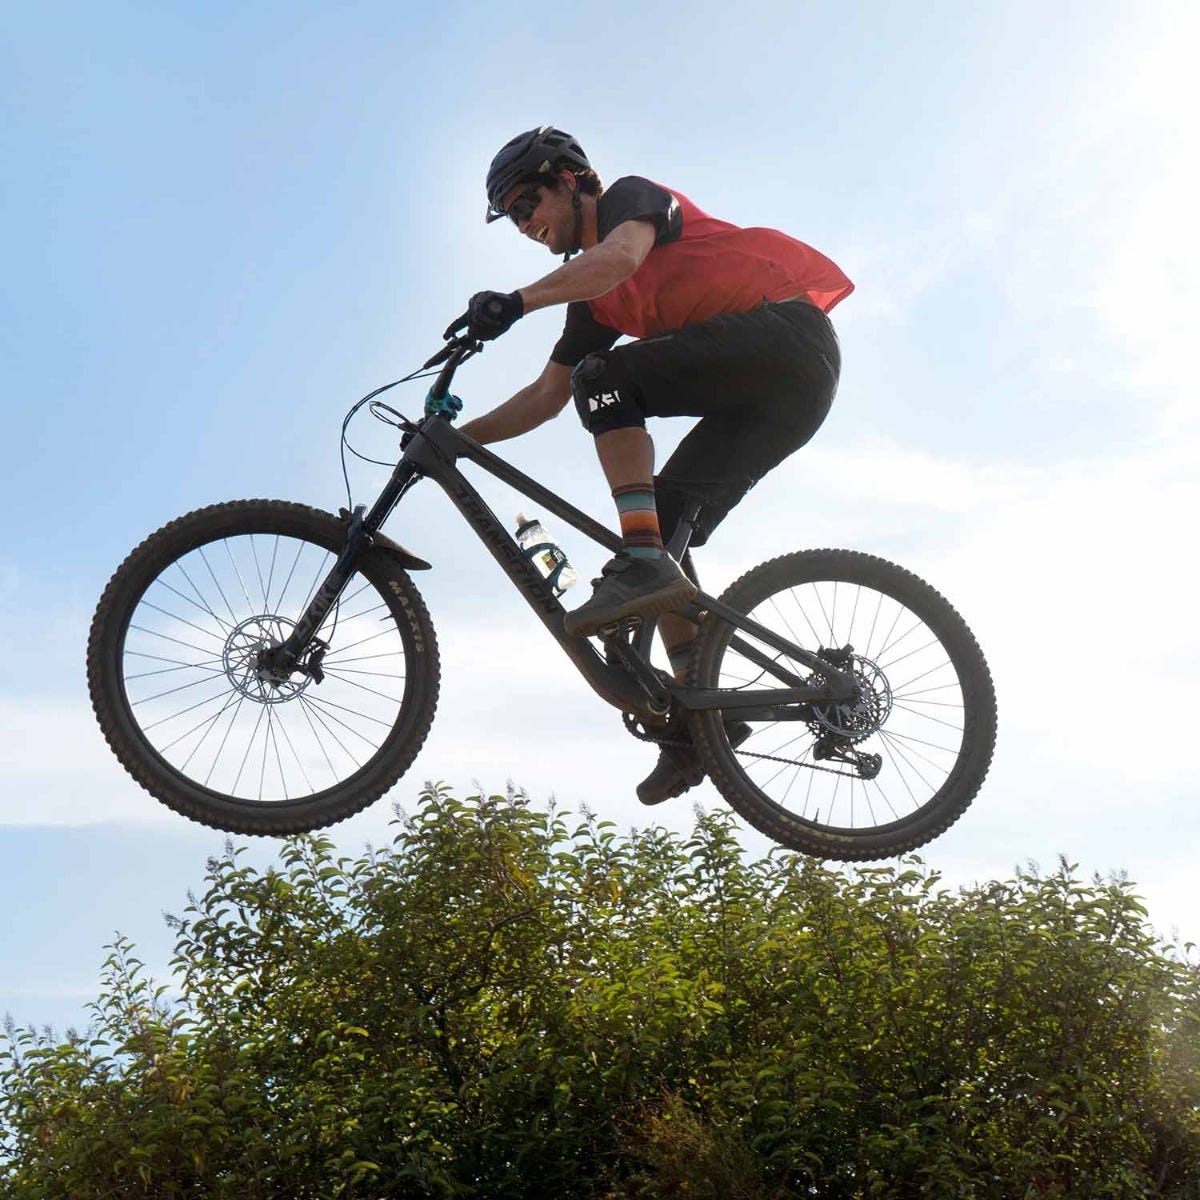 G-Form Pro X3 Knee Pads: Same Slim Protection, Even More Comfortable  [Review] - Singletracks Mountain Bike News